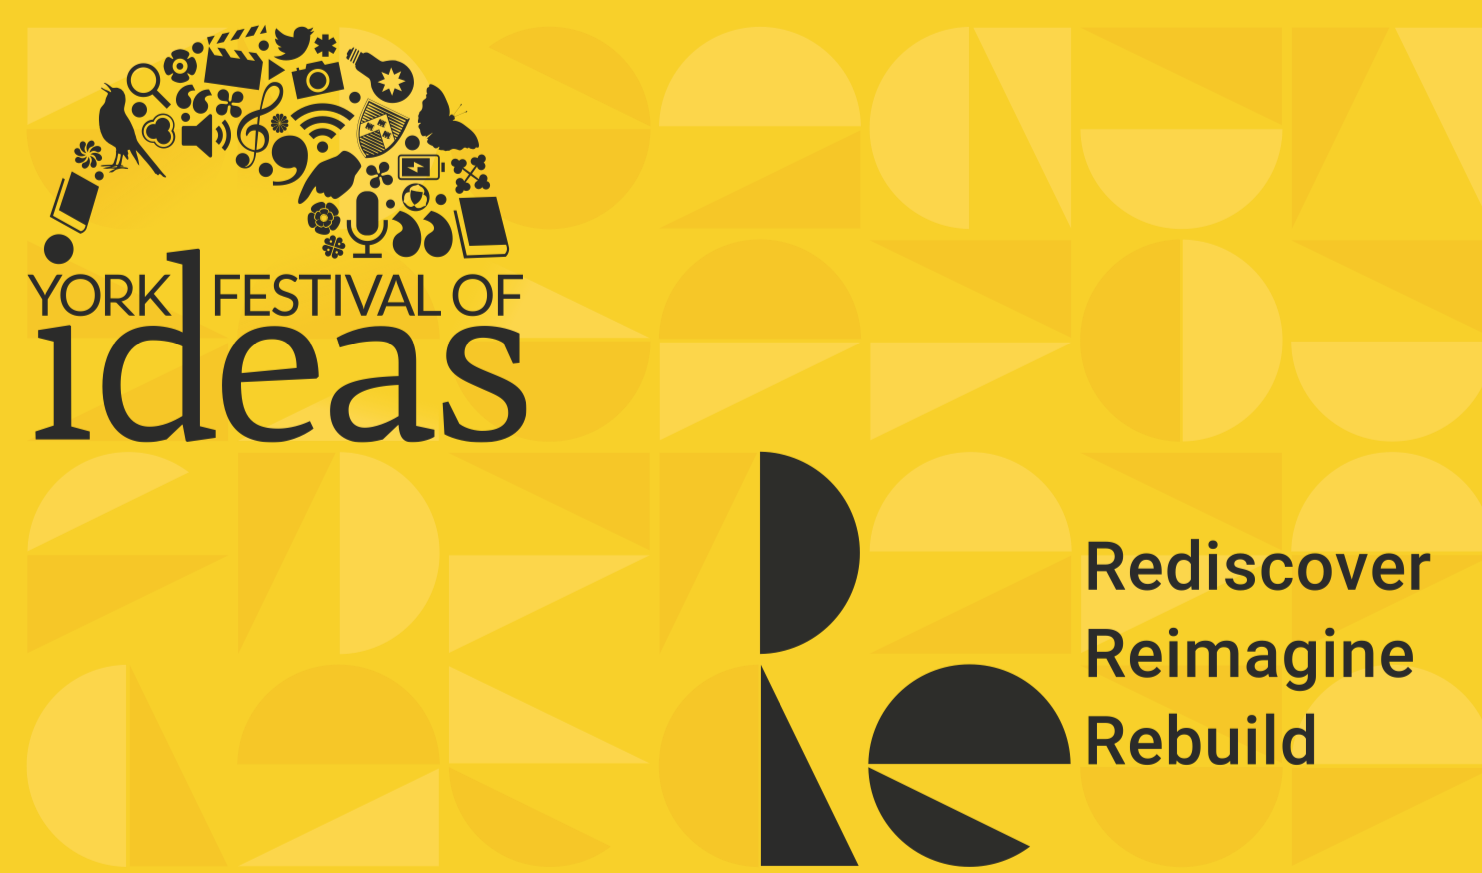 23 June ‘Rediscover, Reimagine, Rebuild’ at the York Festival of